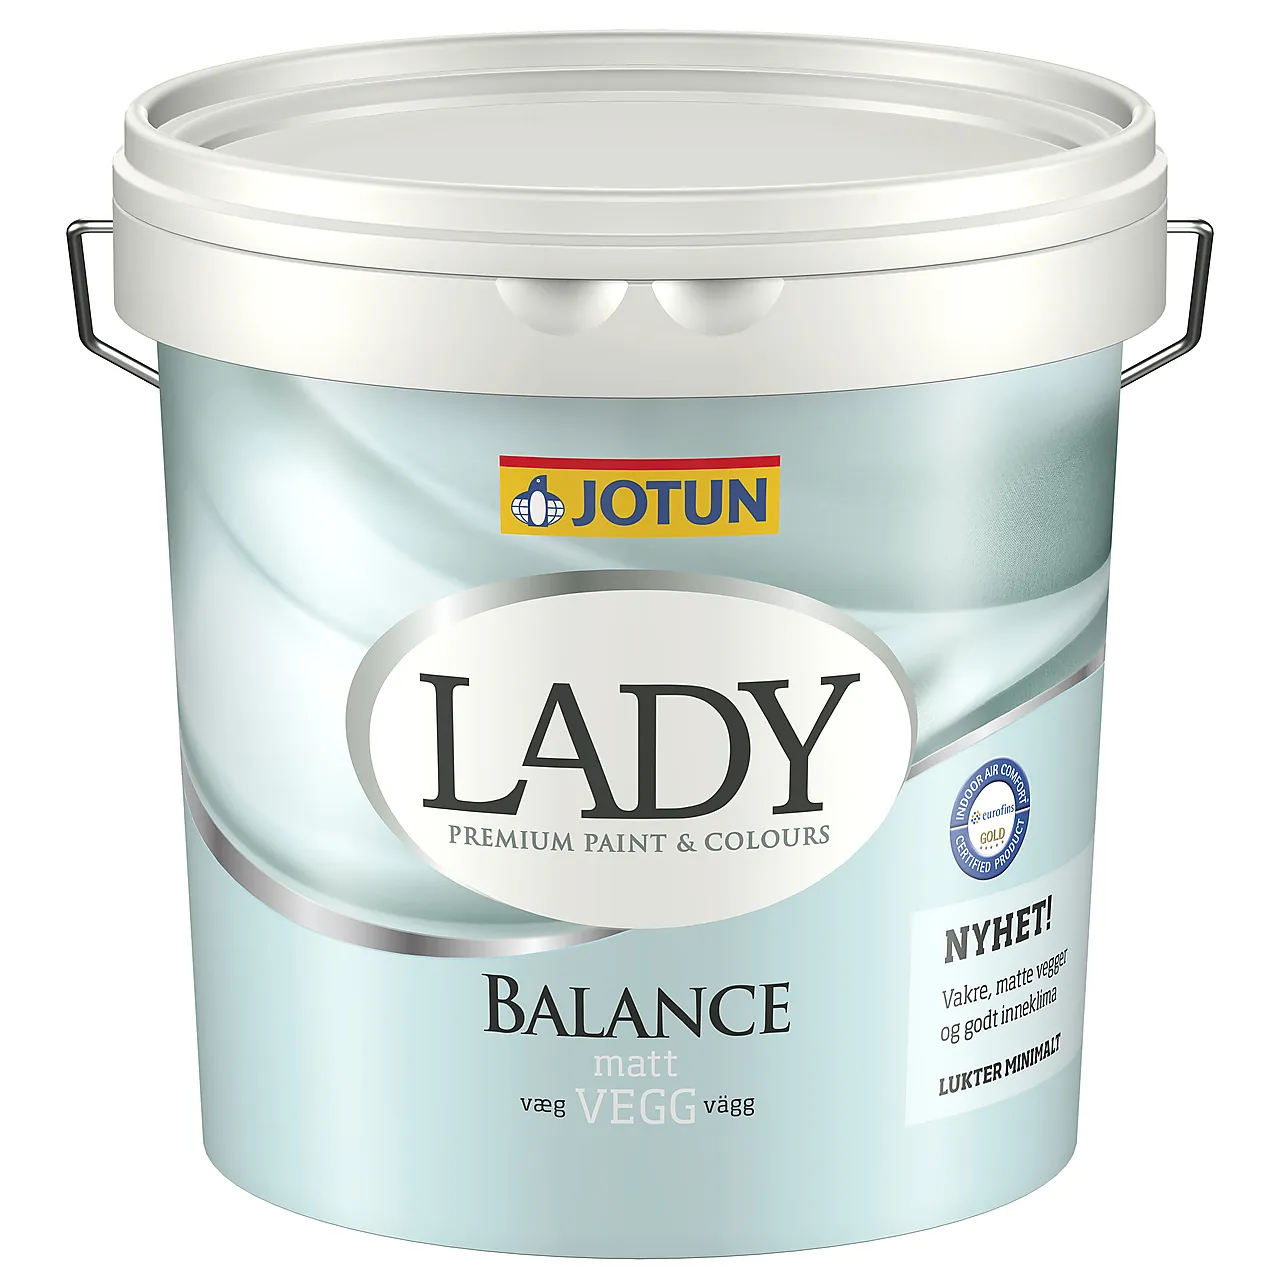 Lady balance a-base 2,7 liter